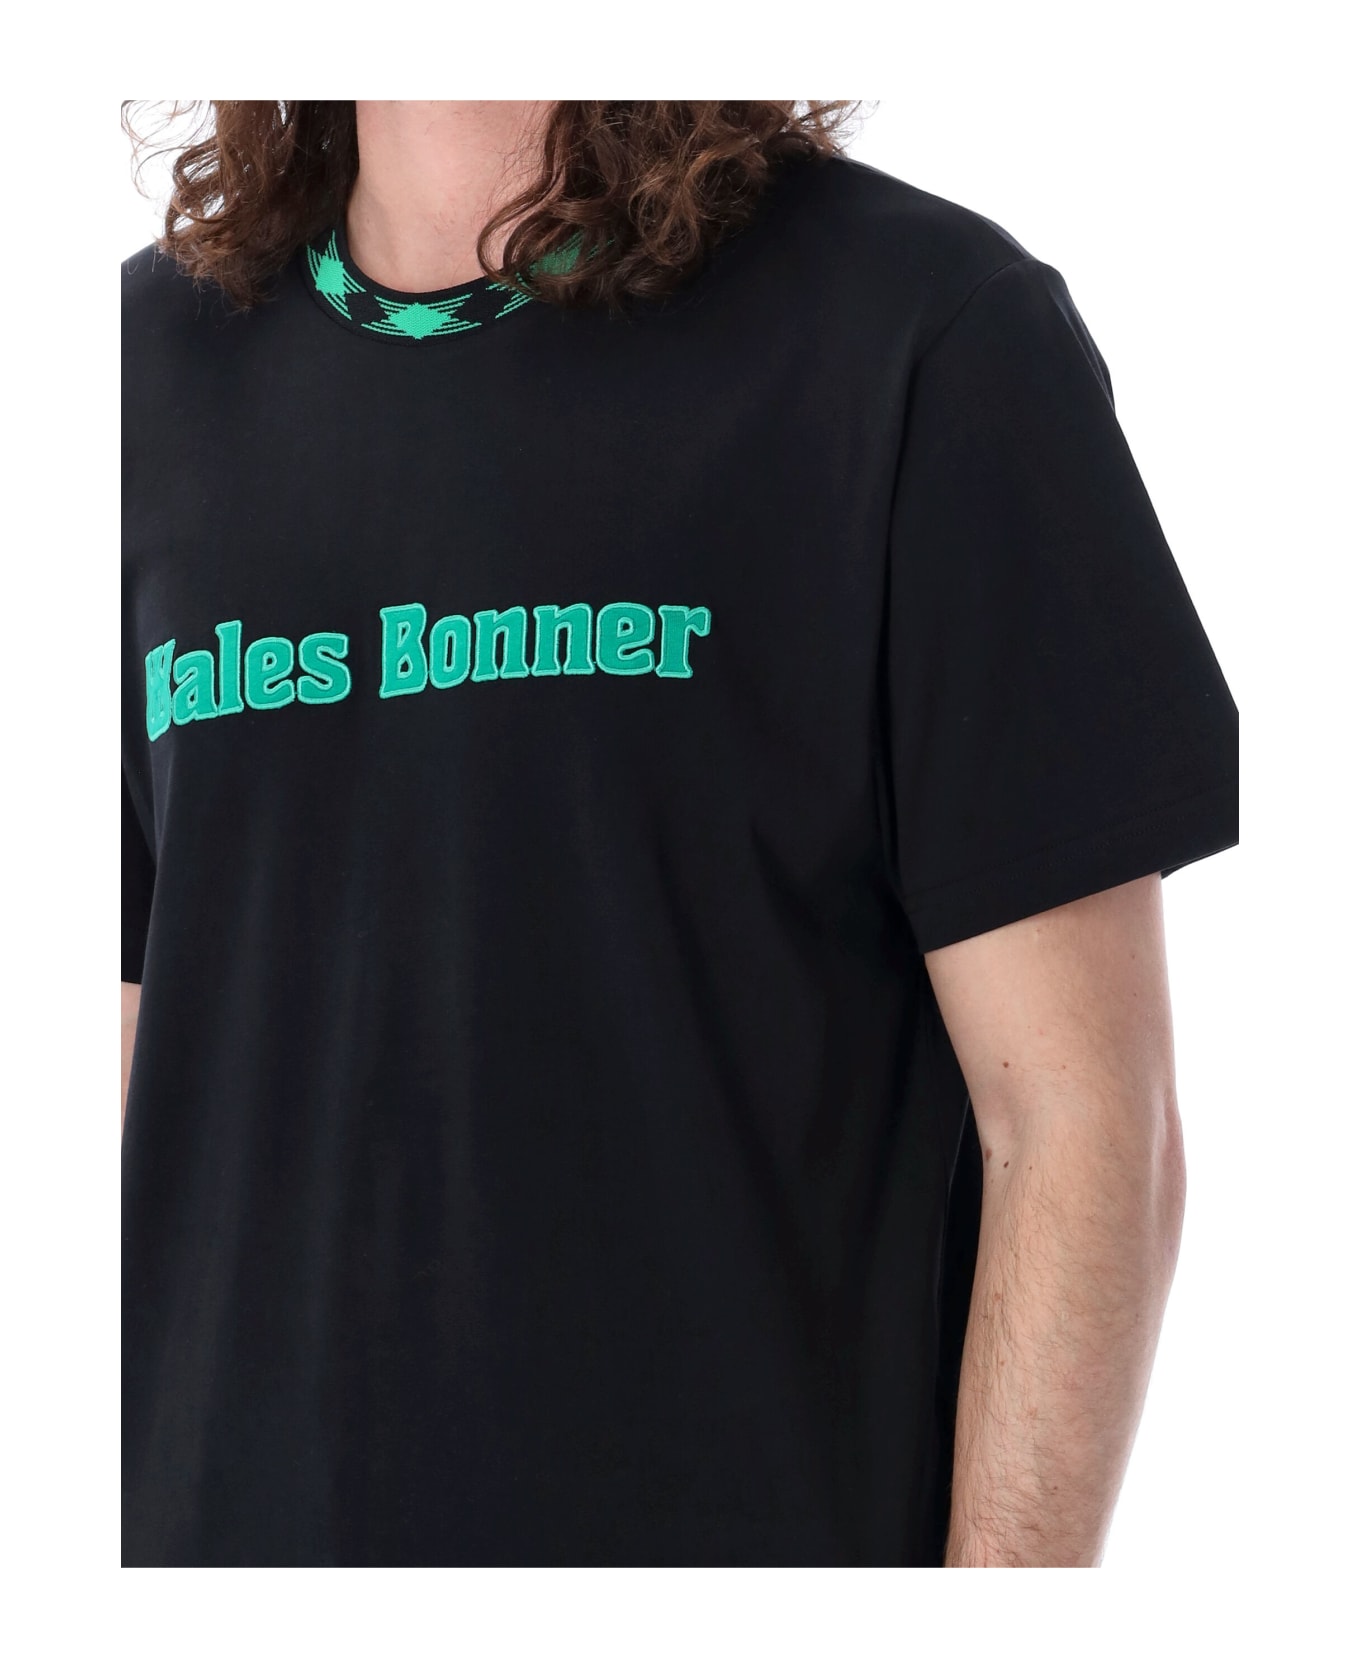 Wales Bonner Original T-shirt - BLACK